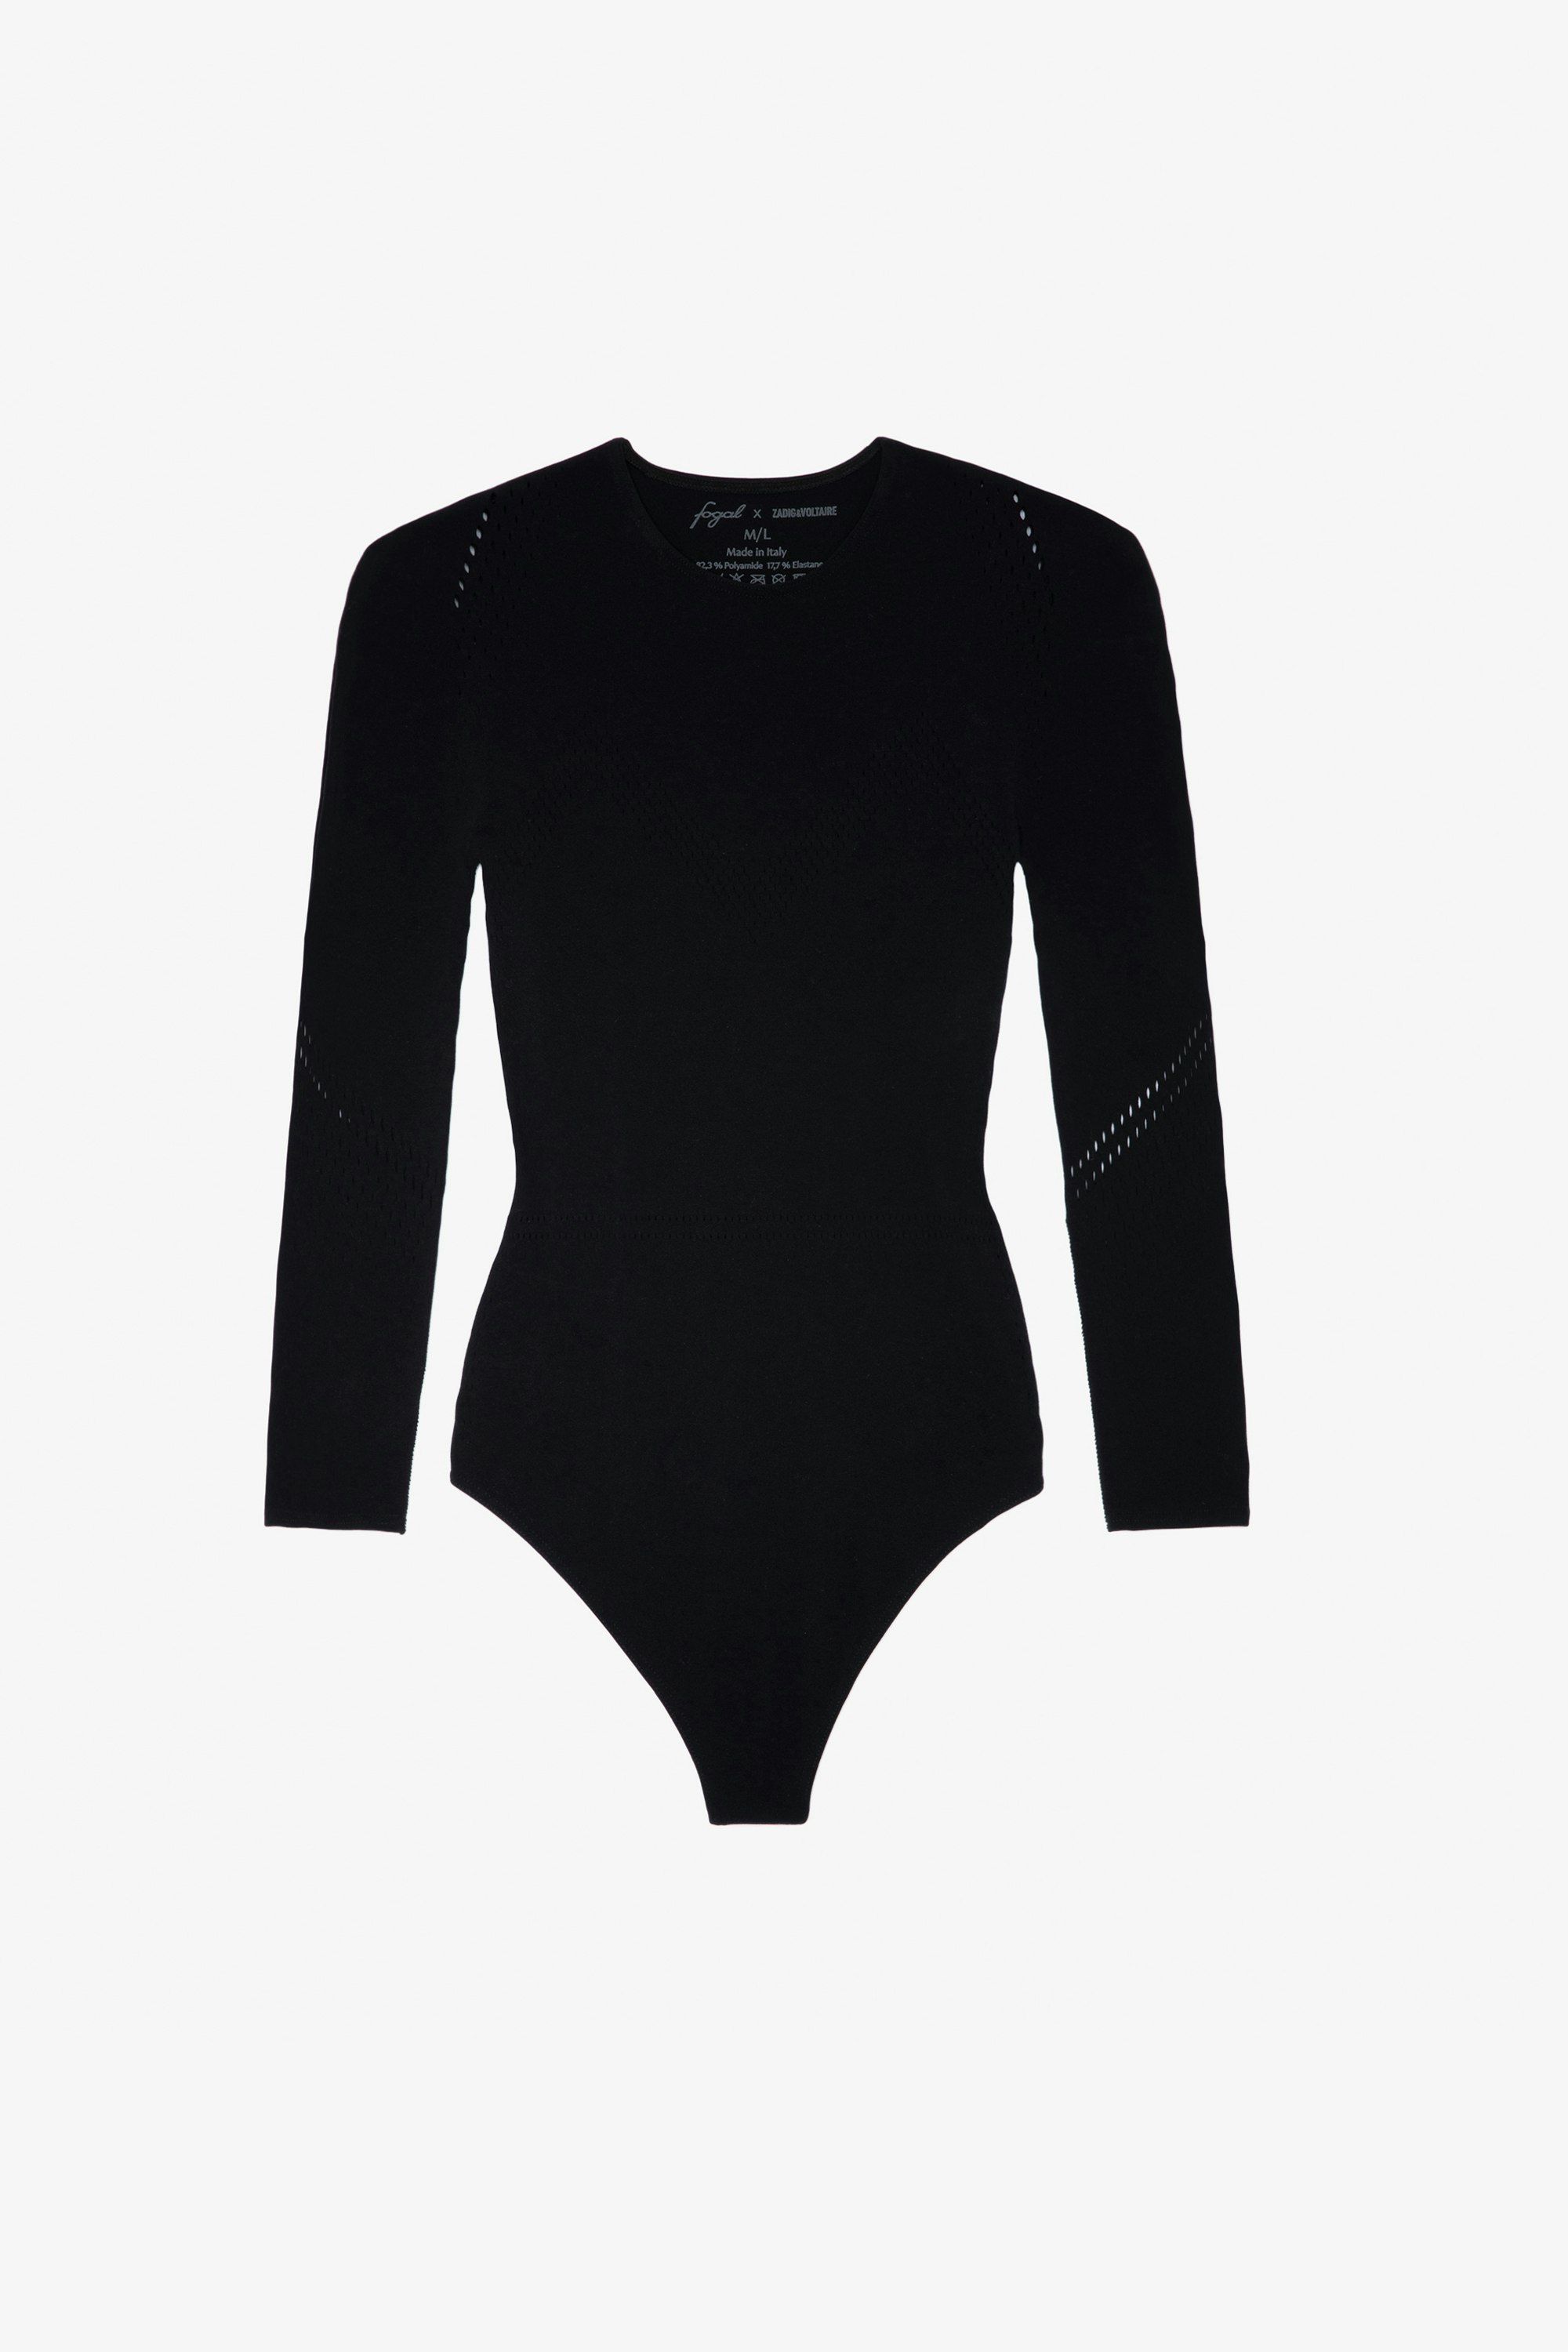 Wanda Bodysuit - Women’s black bodysuit with perforated biker details.